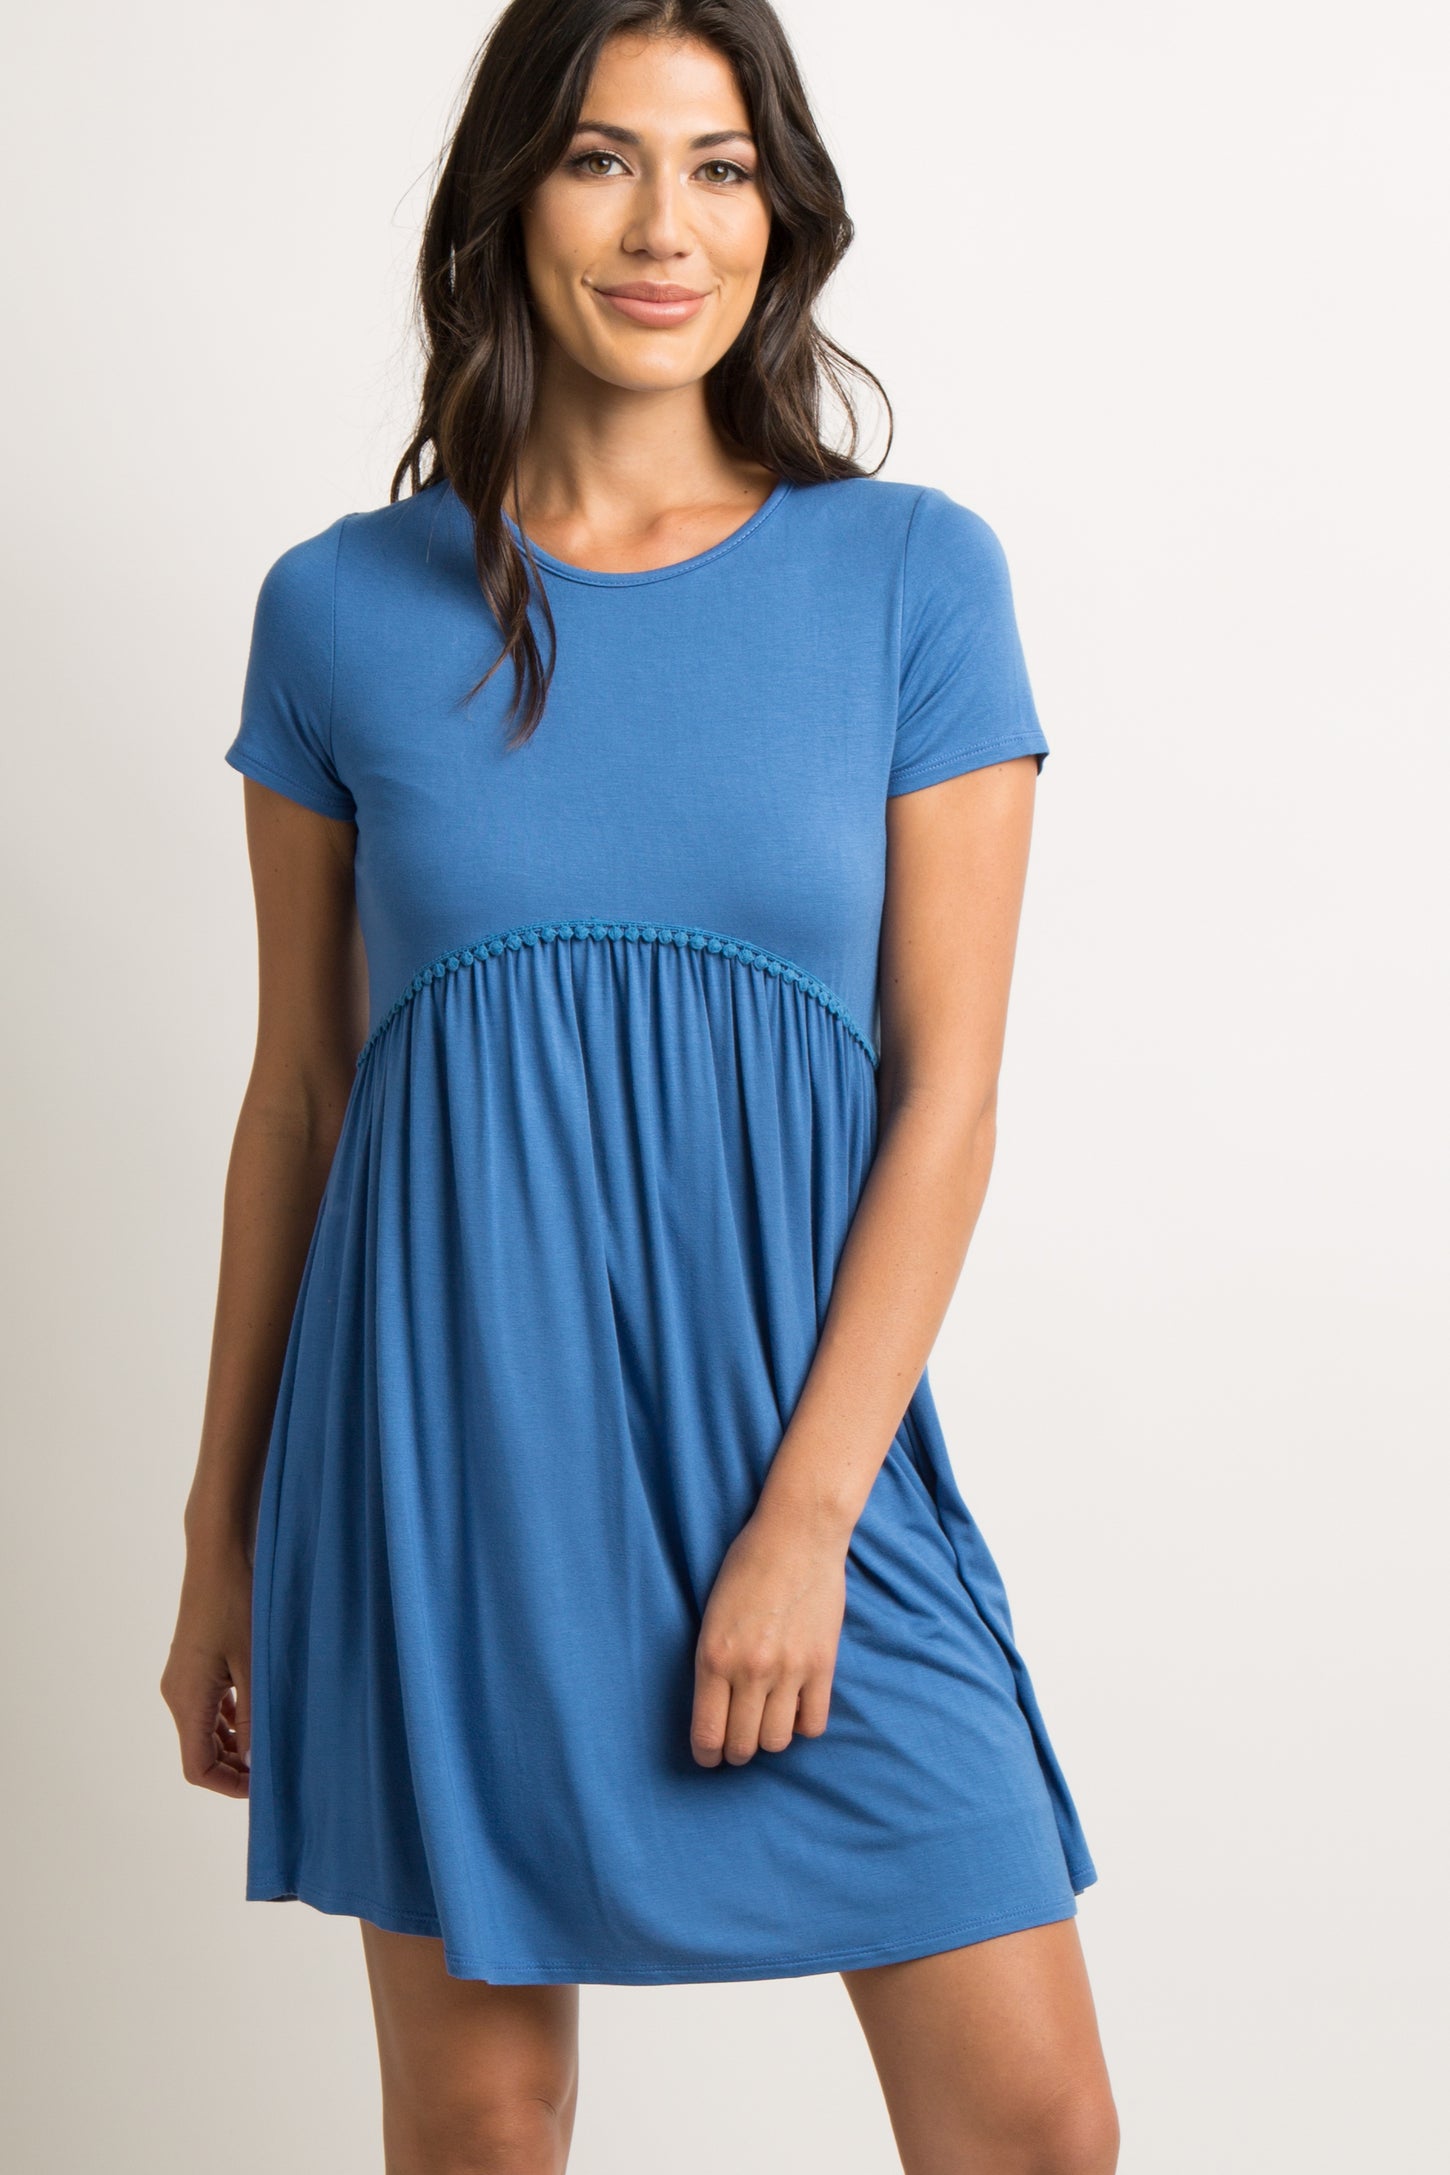 PinkBlush Blue Solid Crochet Trim Maternity Shift Dress